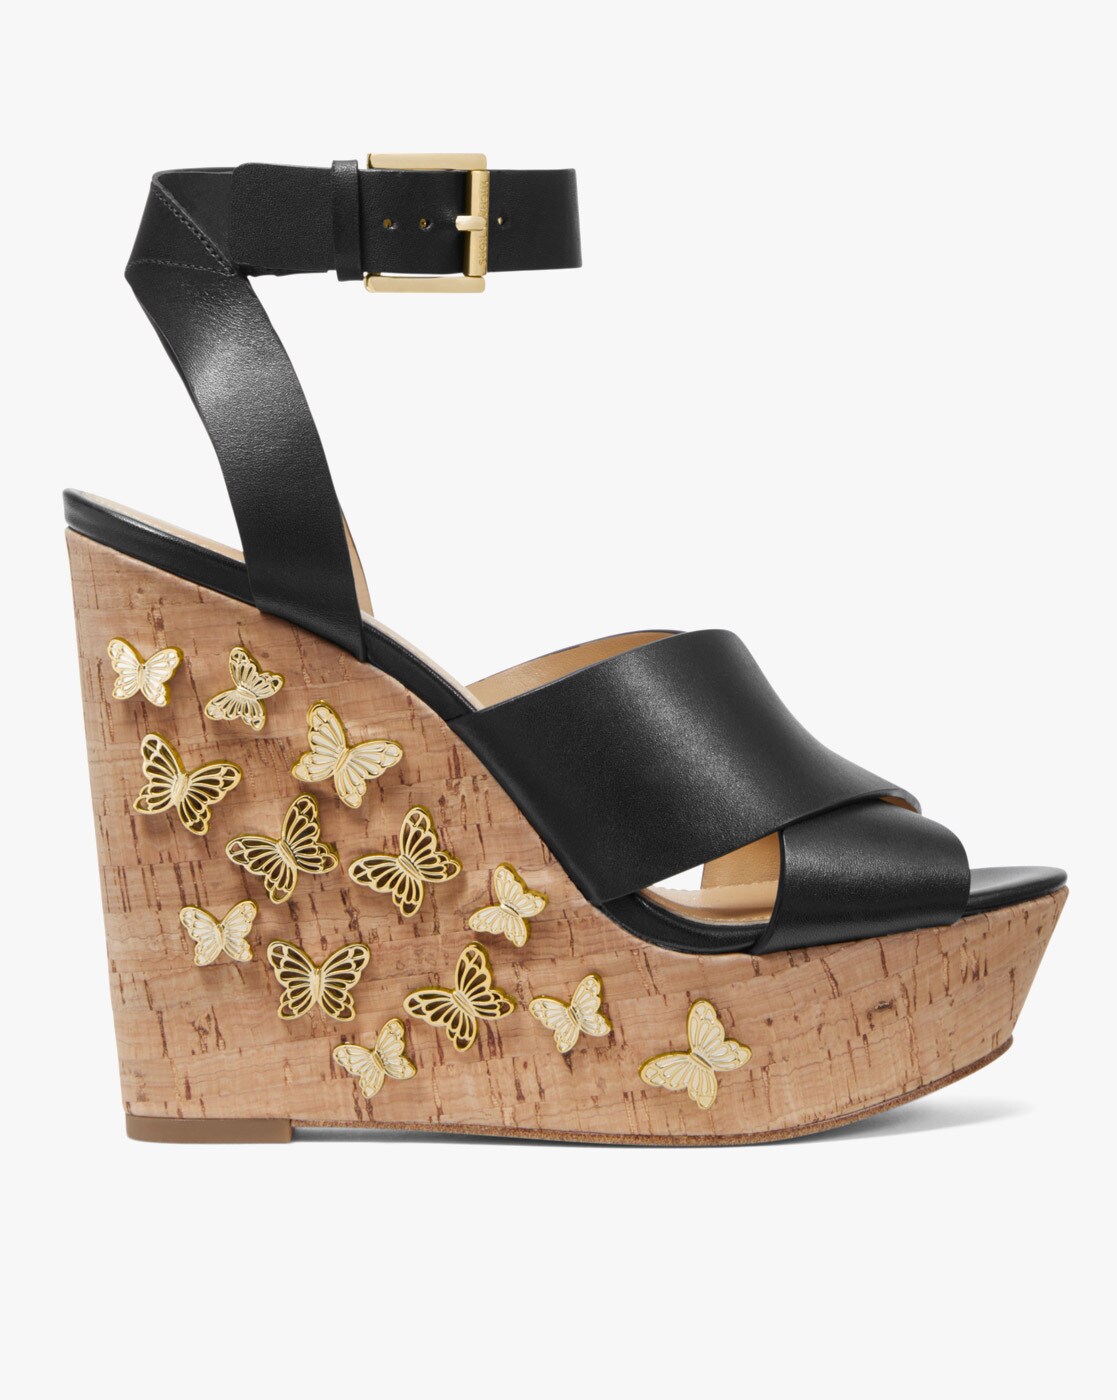 Buy Black Heeled Sandals for Women by Michael Kors Online 